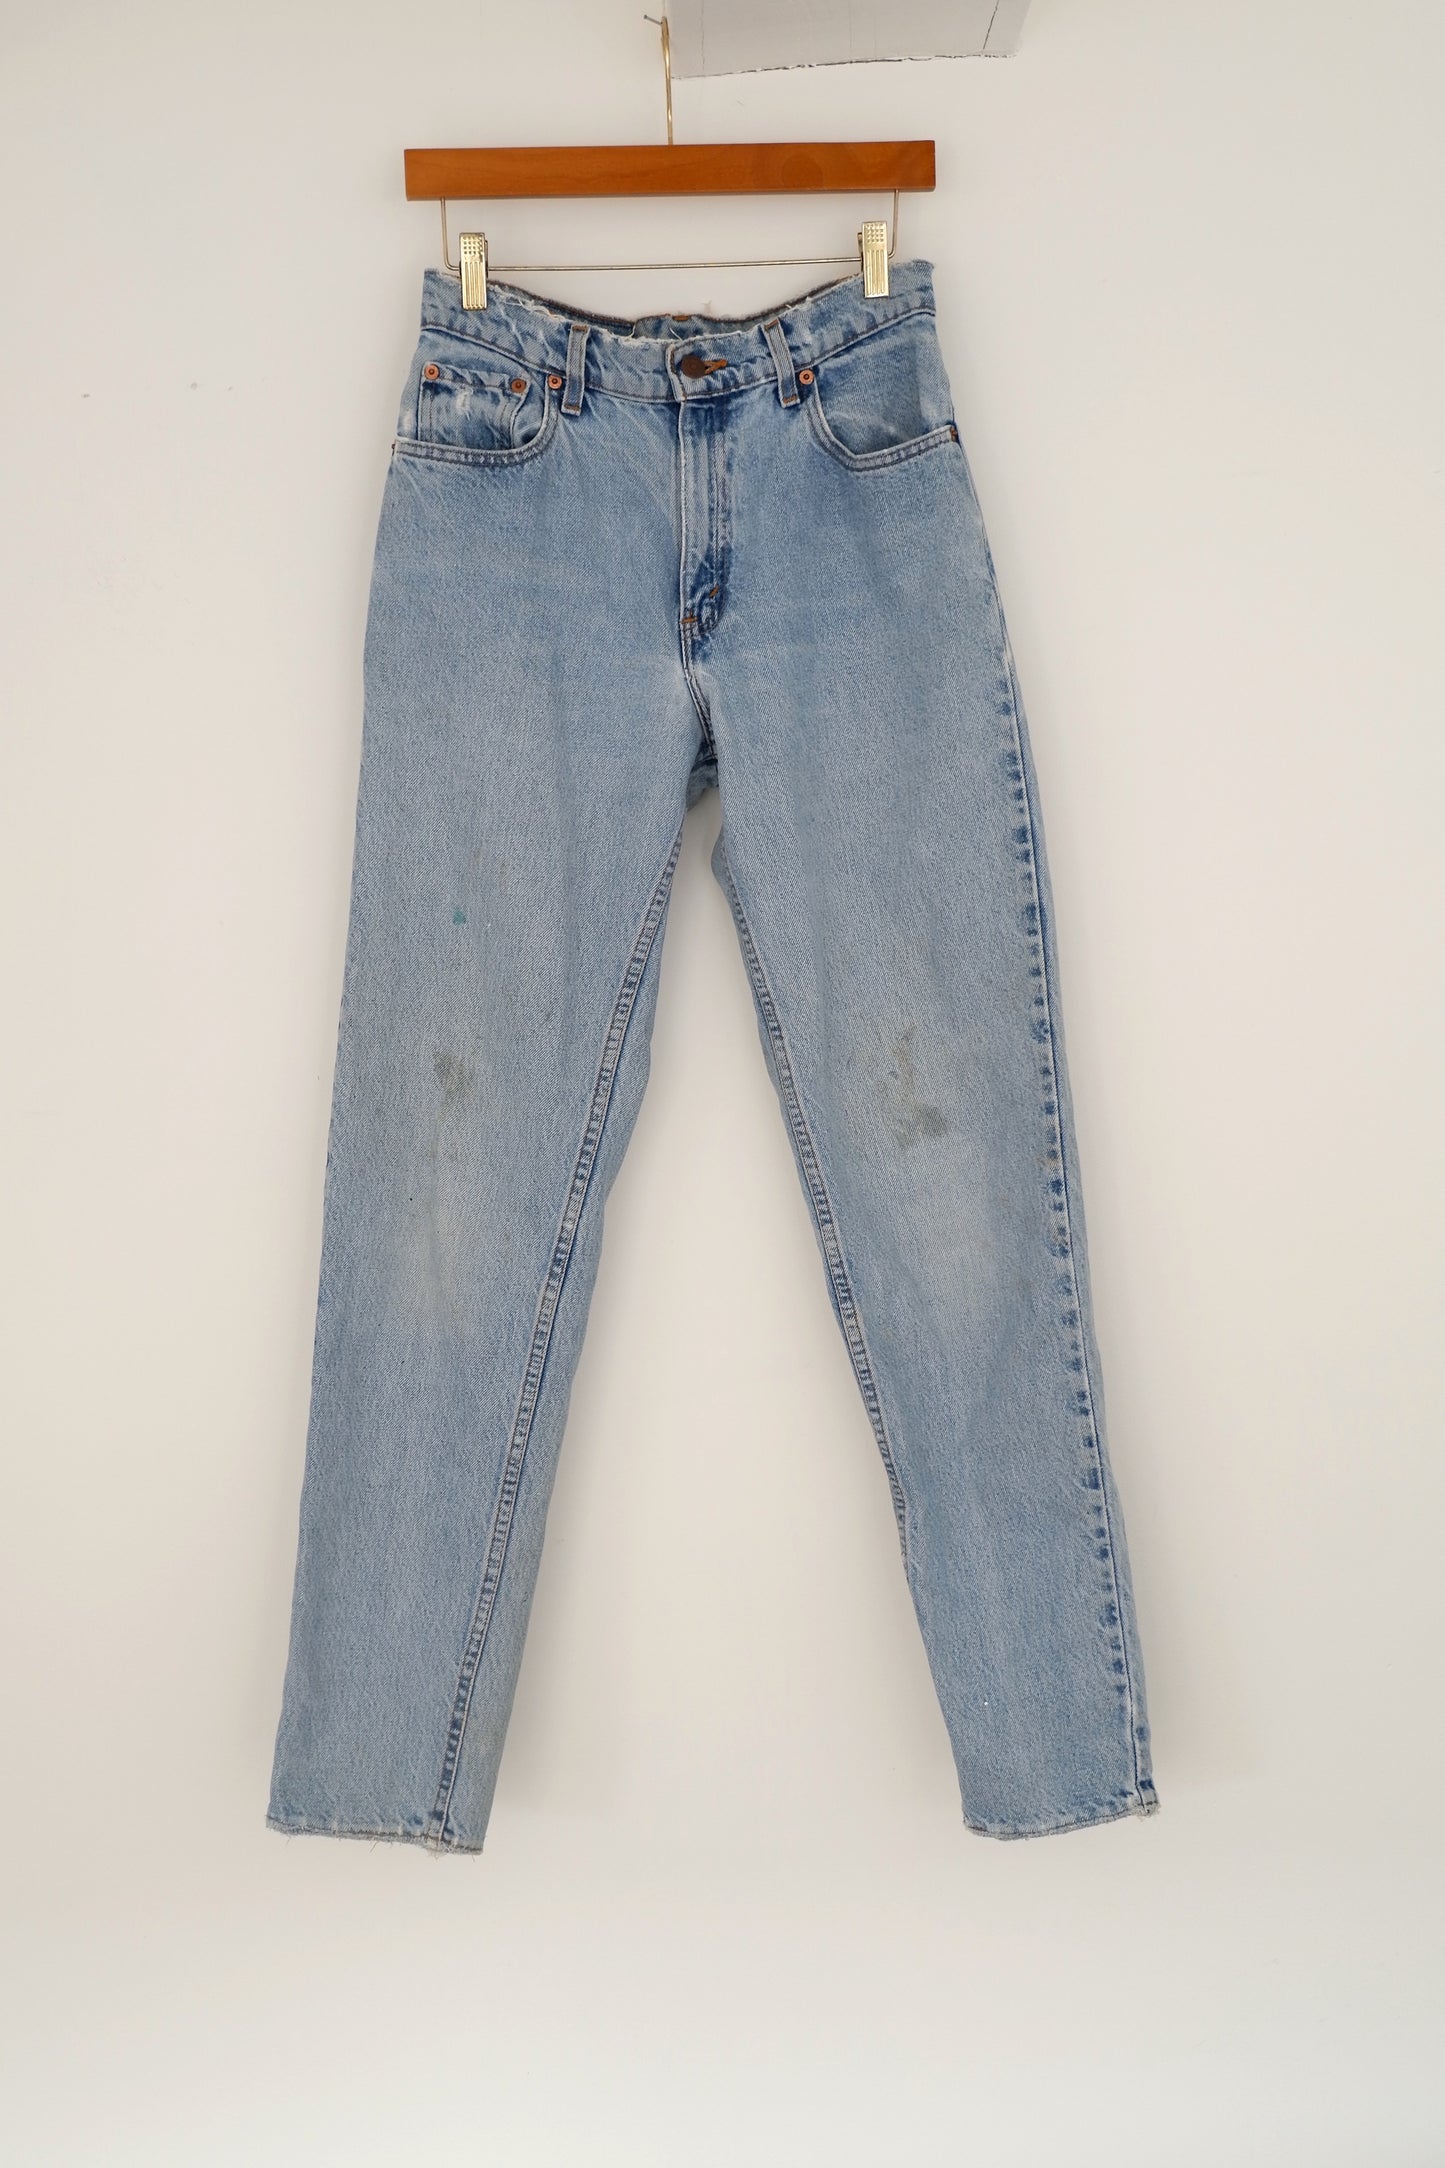 Levis Vintage 550 Light Wash Jeans - 28